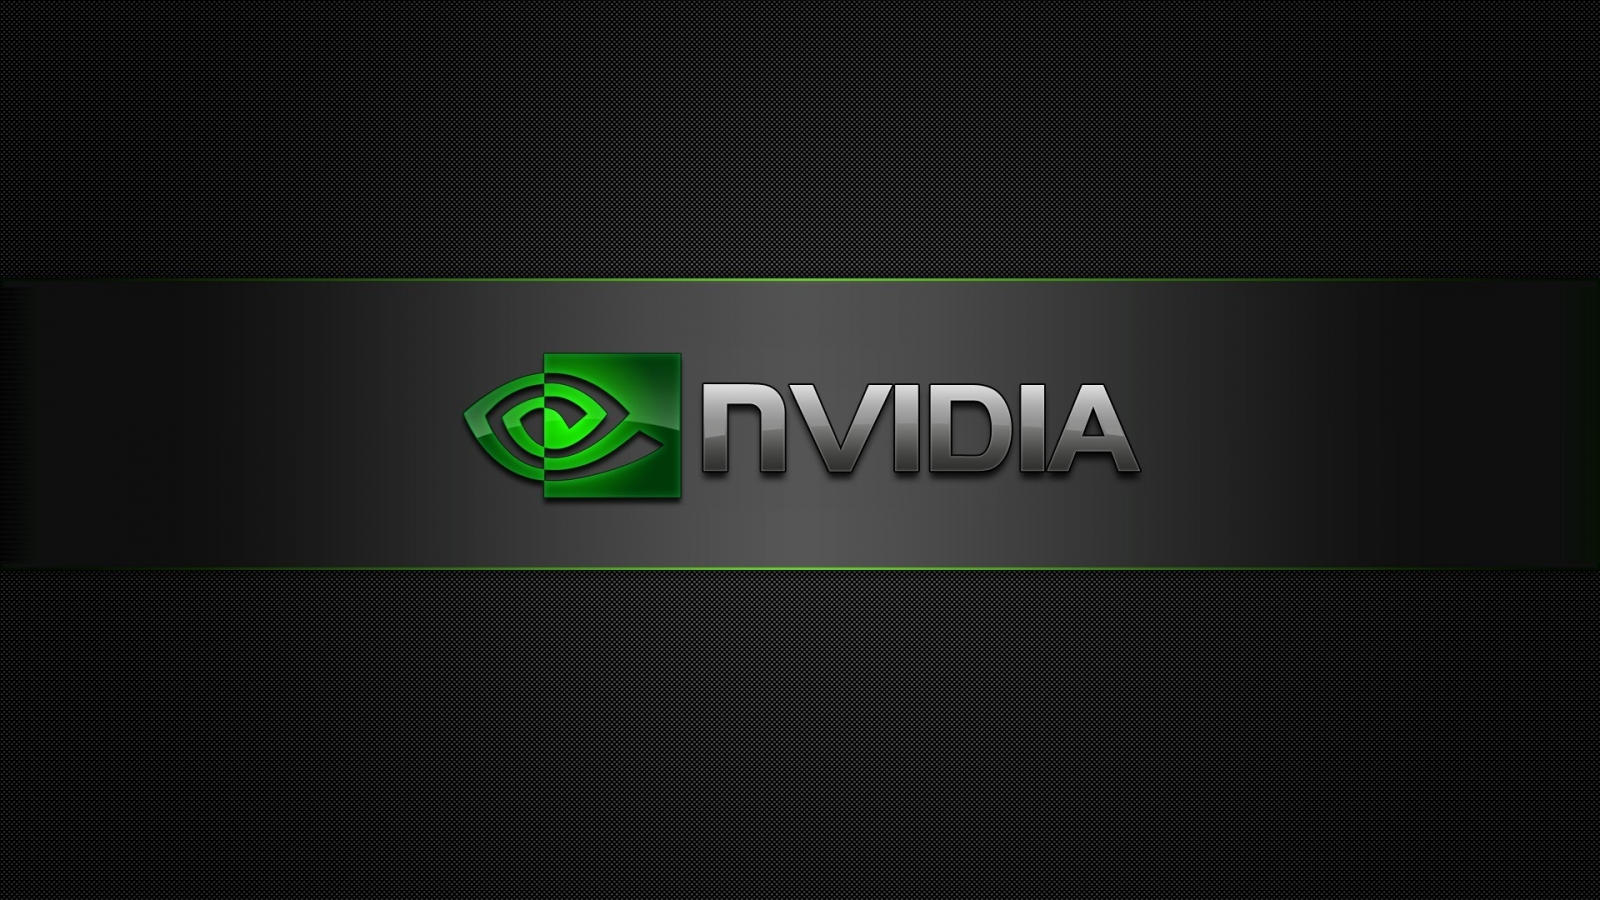 Nvidia Minimalistic for 1600 x 900 HDTV resolution